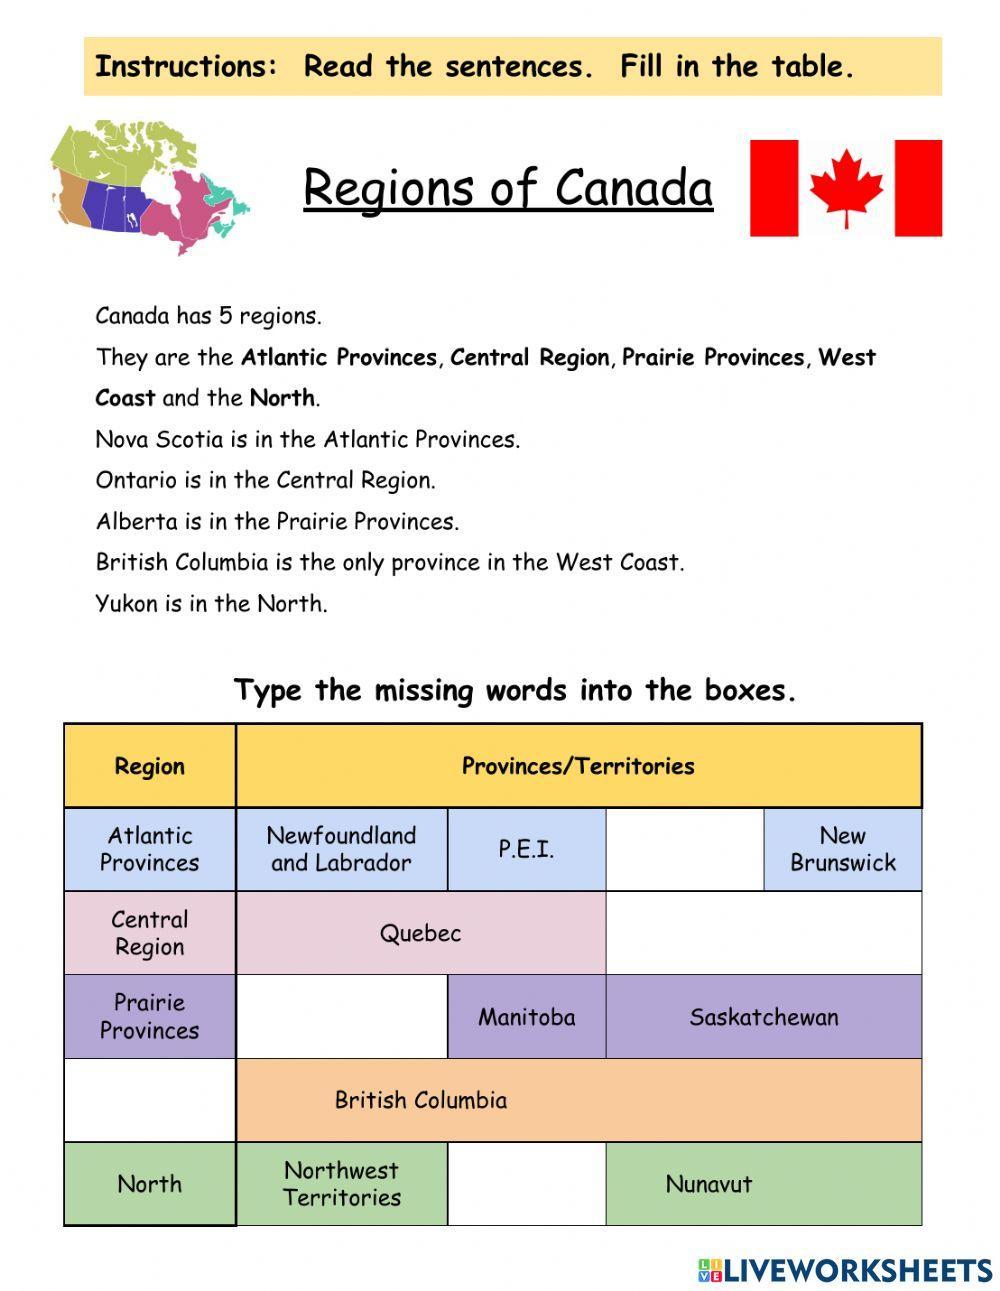 Regions of Canada